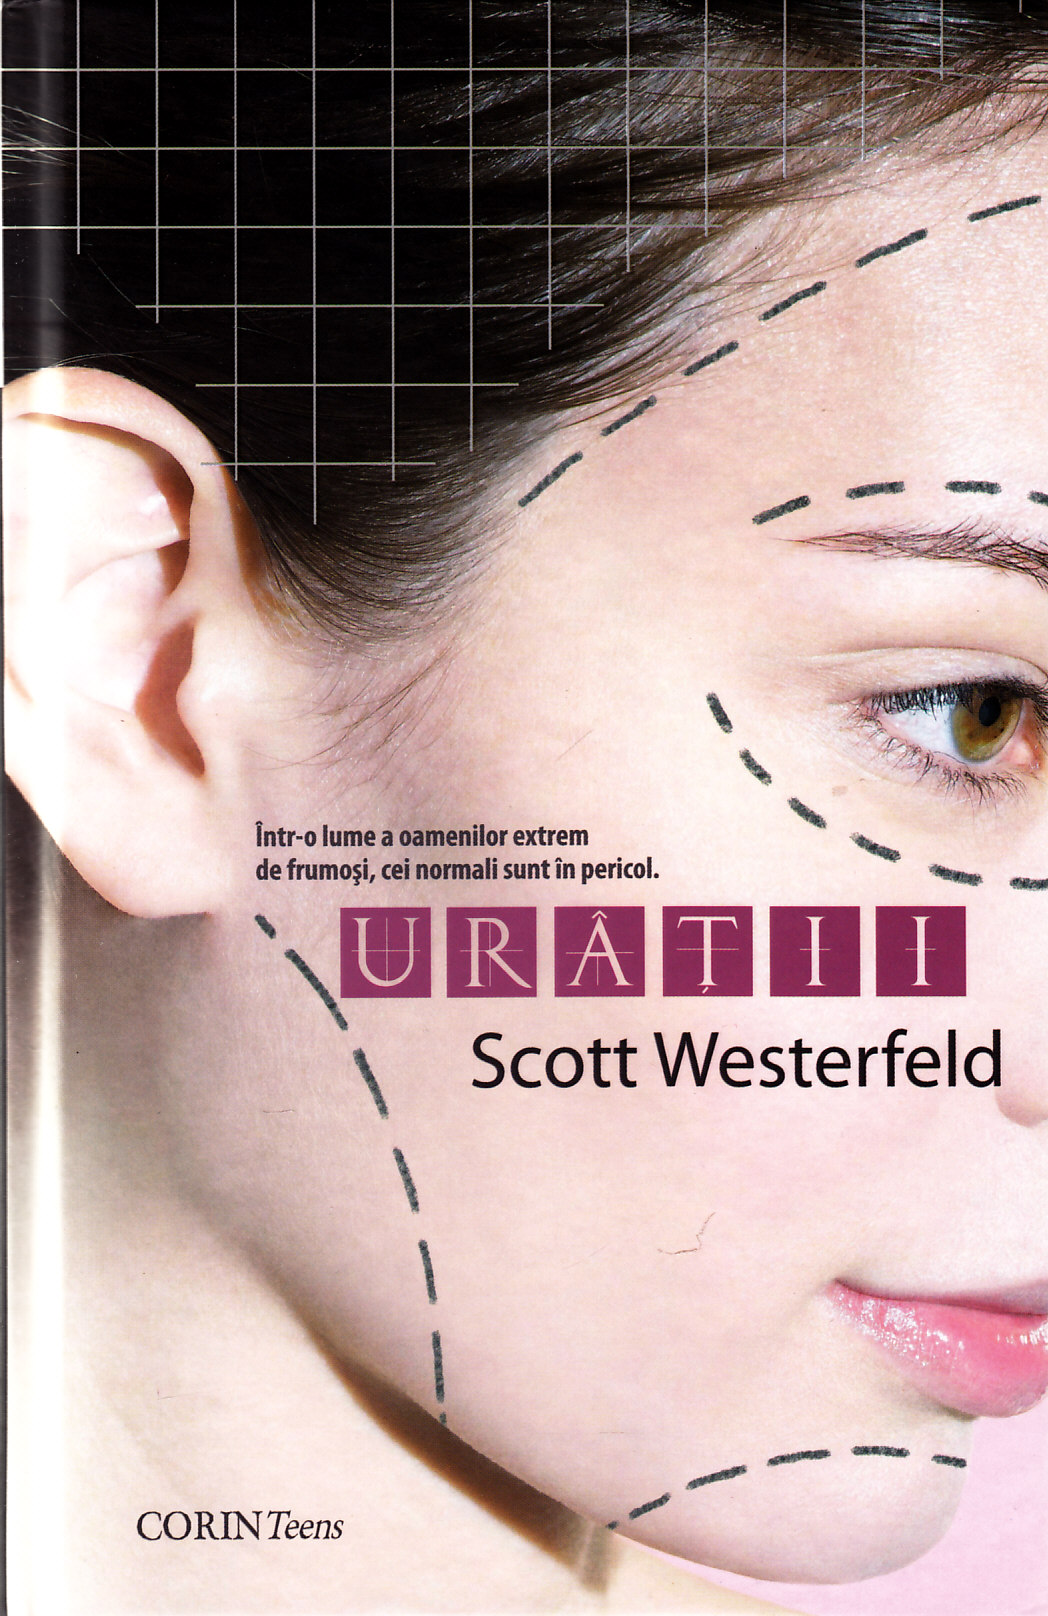 Uratii - Scott Westerfeld